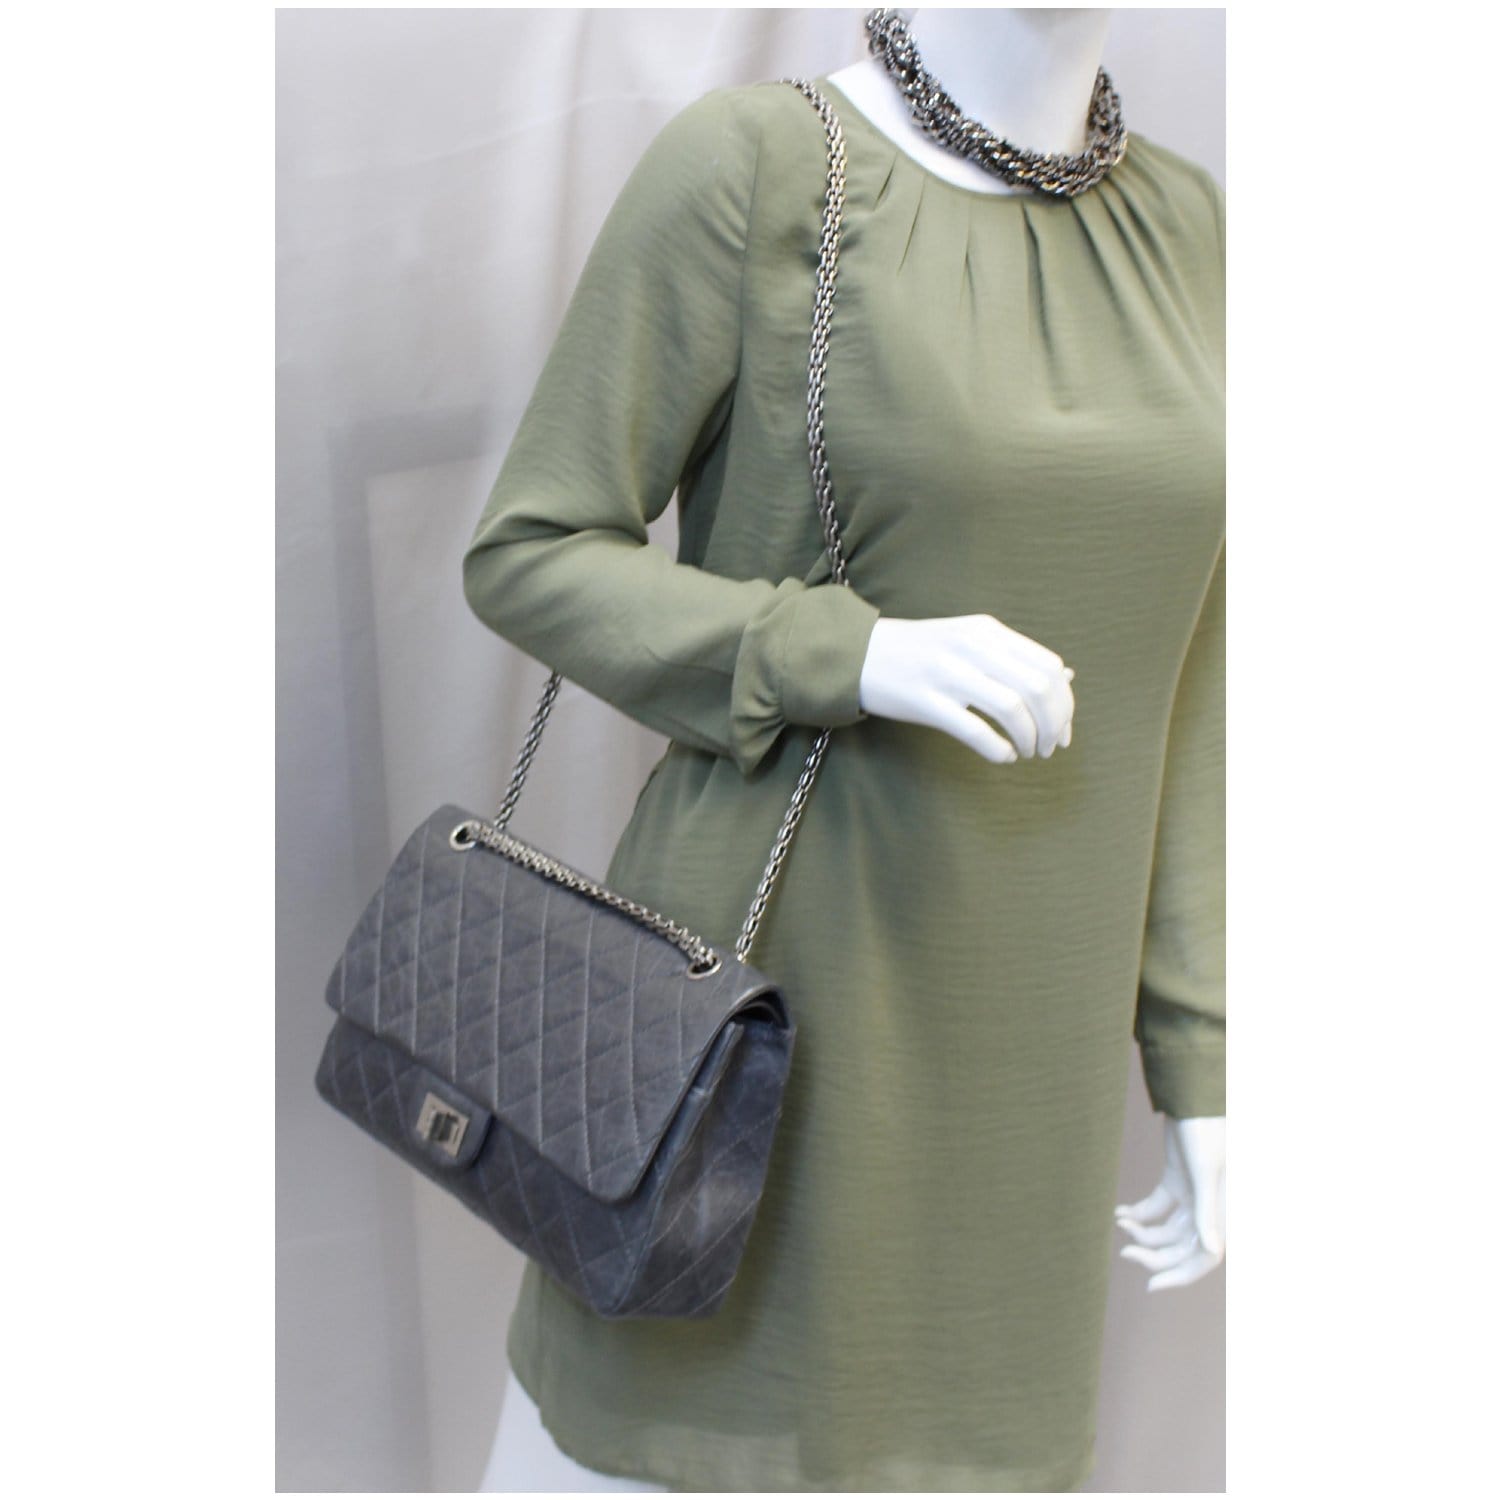 CHANEL 2.55 Medium Bags & Handbags for Women, Authenticity Guaranteed